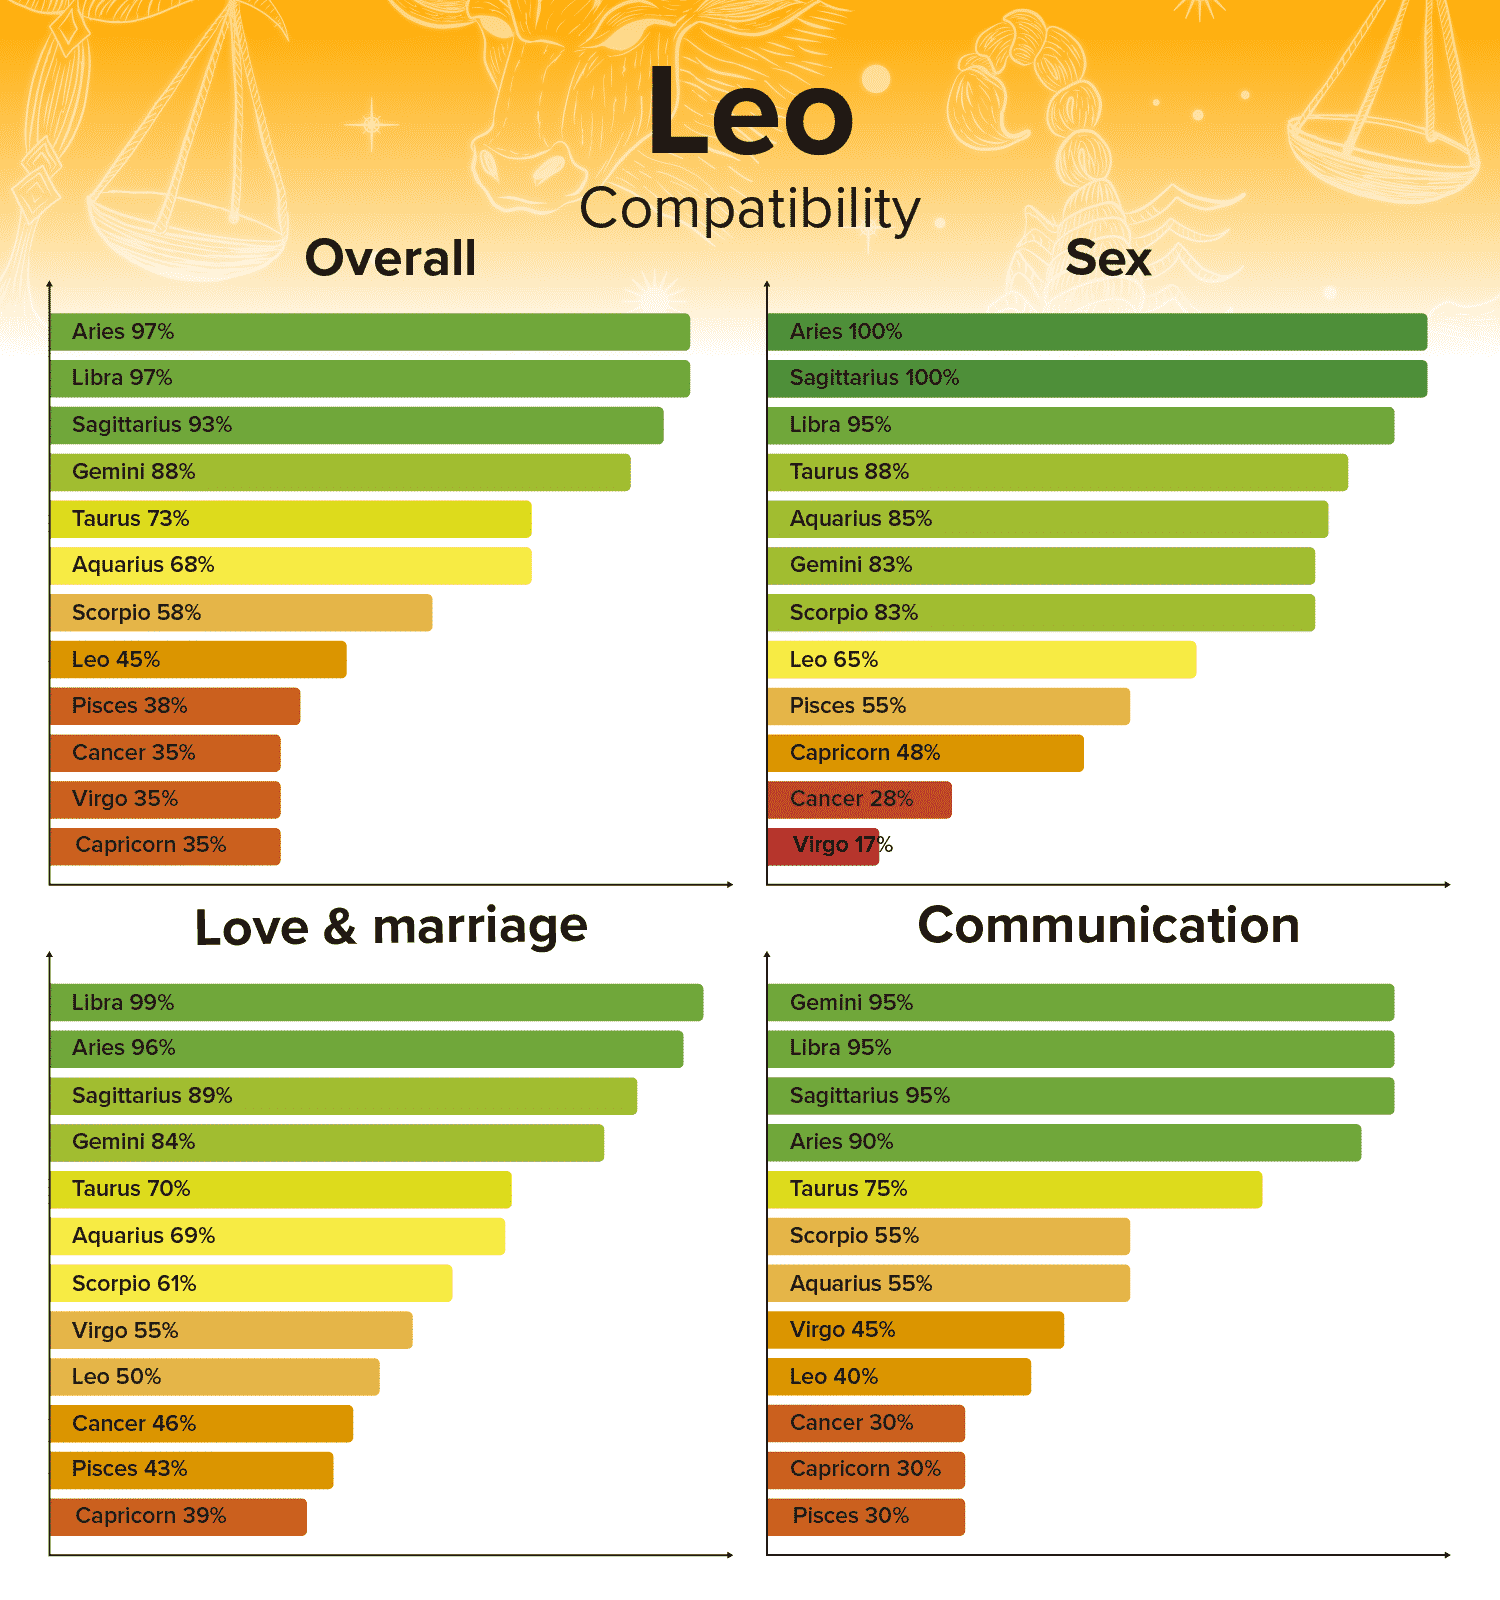 Leo Compatibility